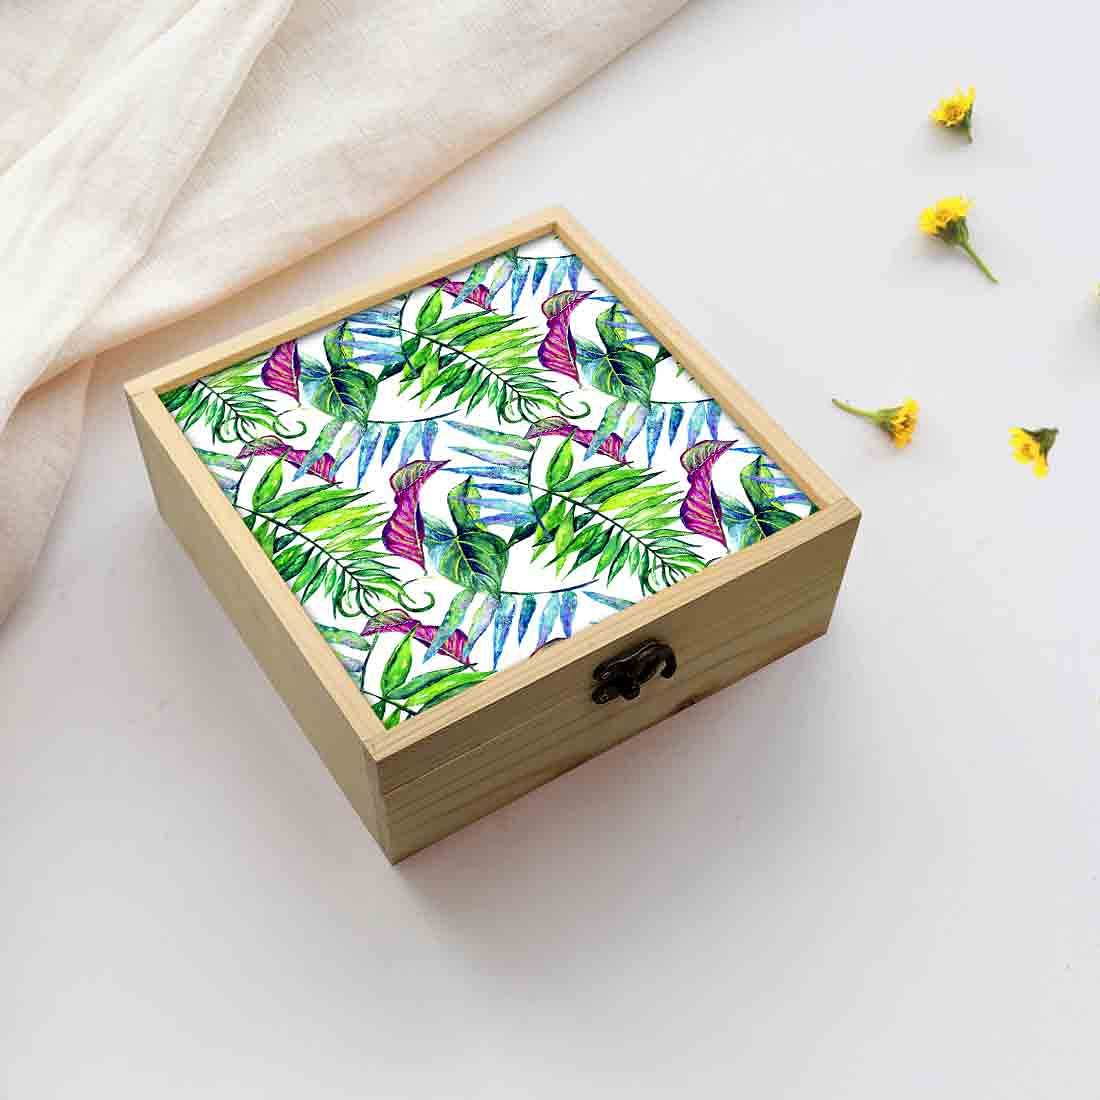 Jewellery Box Wooden Jewelry Organizer -  Green And Purple Tropical Leaf Nutcase